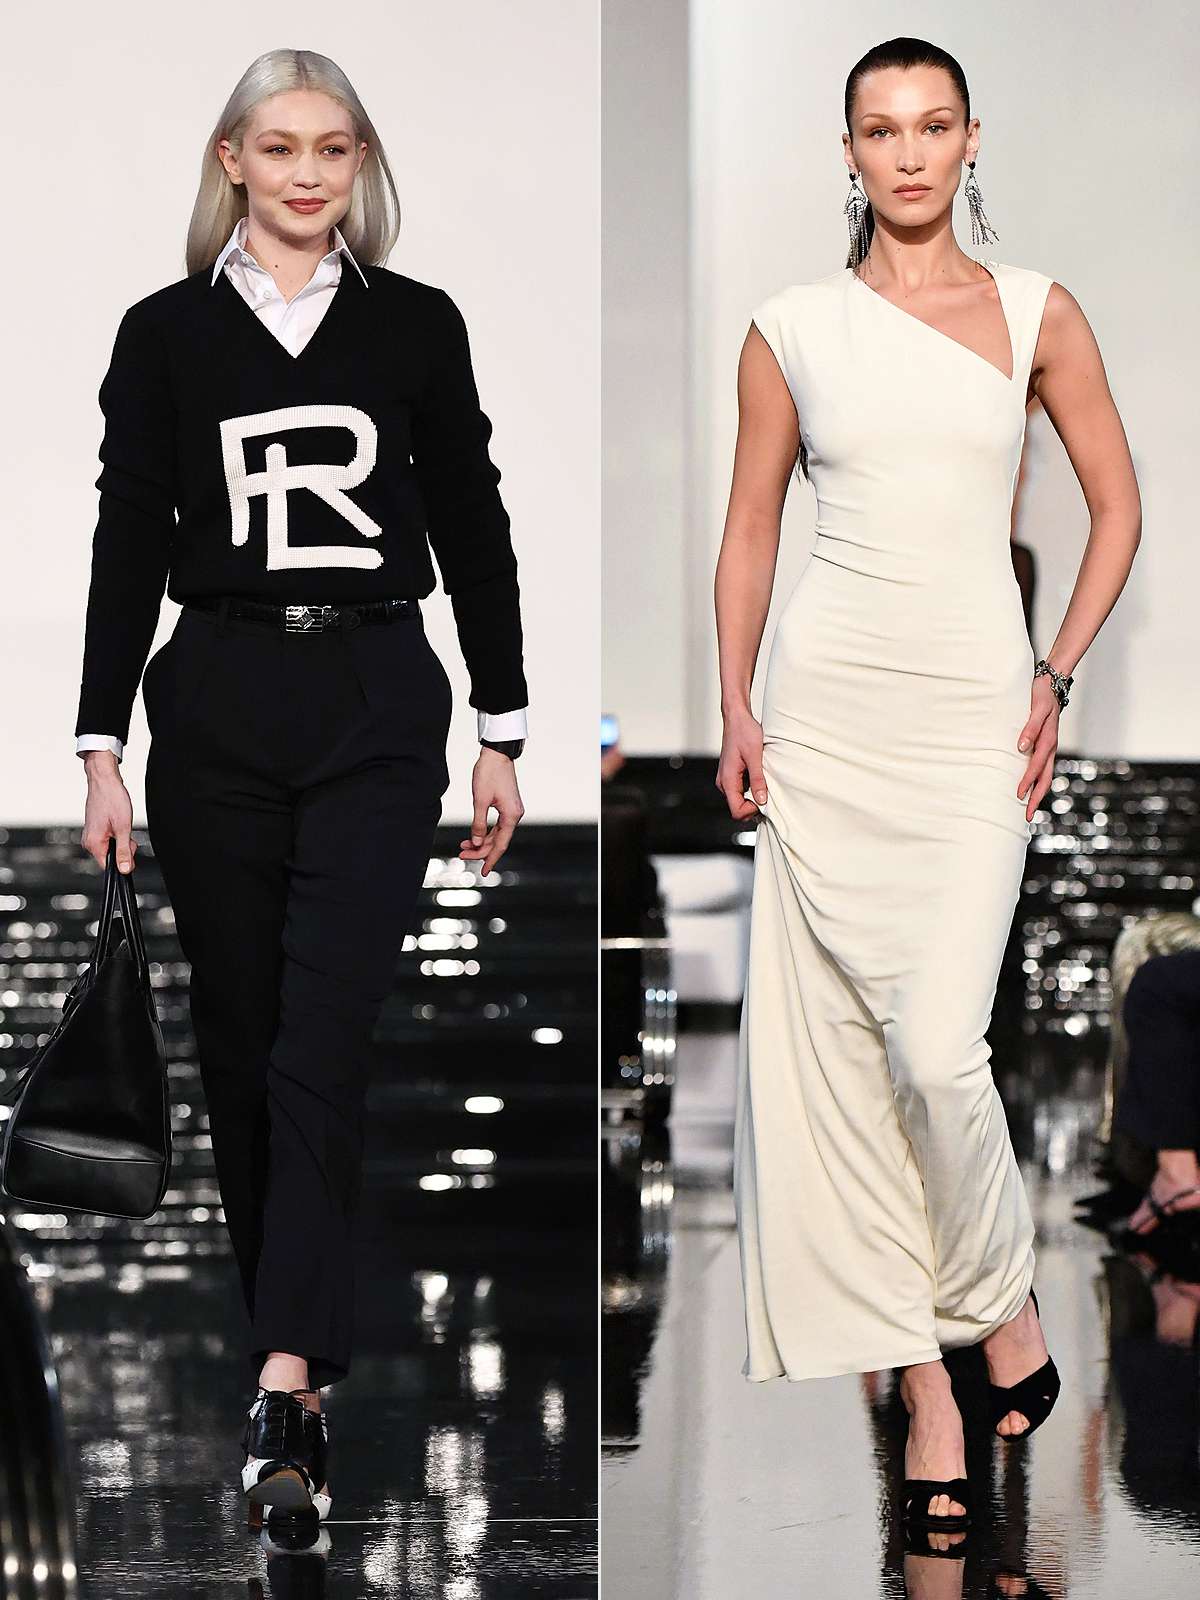 Gigi and Bella Hadid Walk Ralph Lauren Runway at Designer’s Star-Studded Fashion Show in N.Y.C.